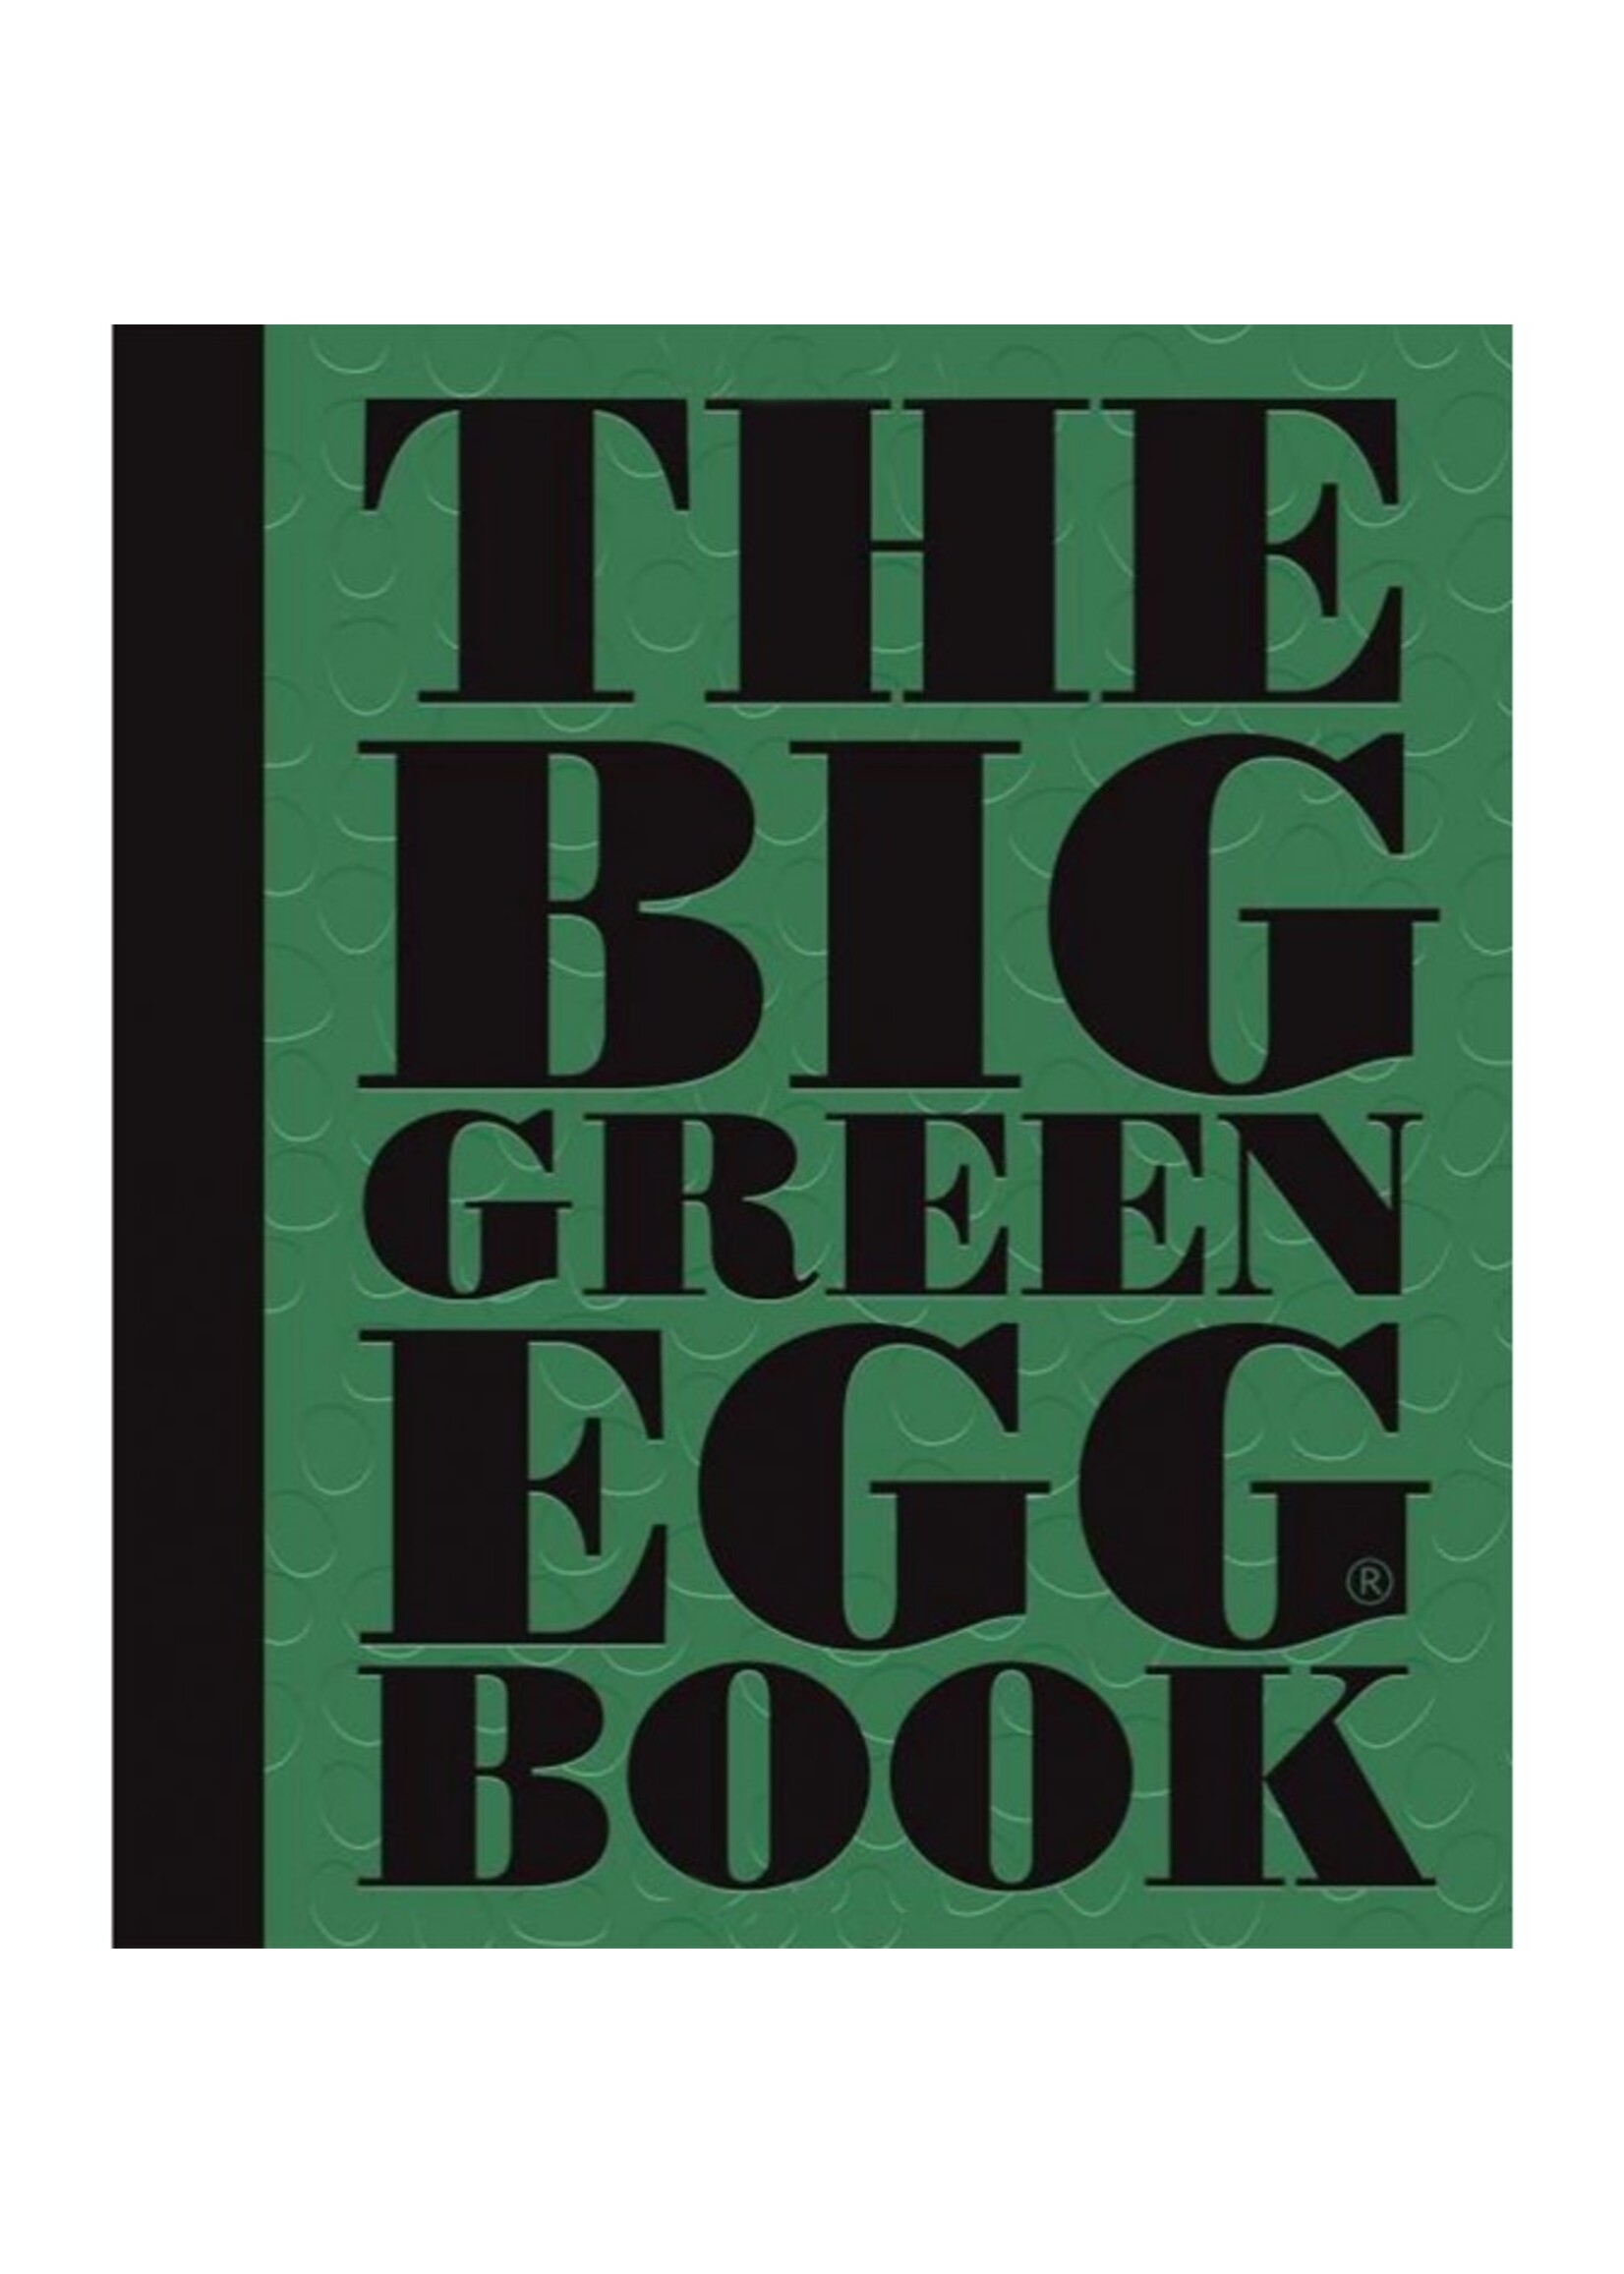 Big Green Egg BGE Cookbook, "The Big Green Egg Cookbook"